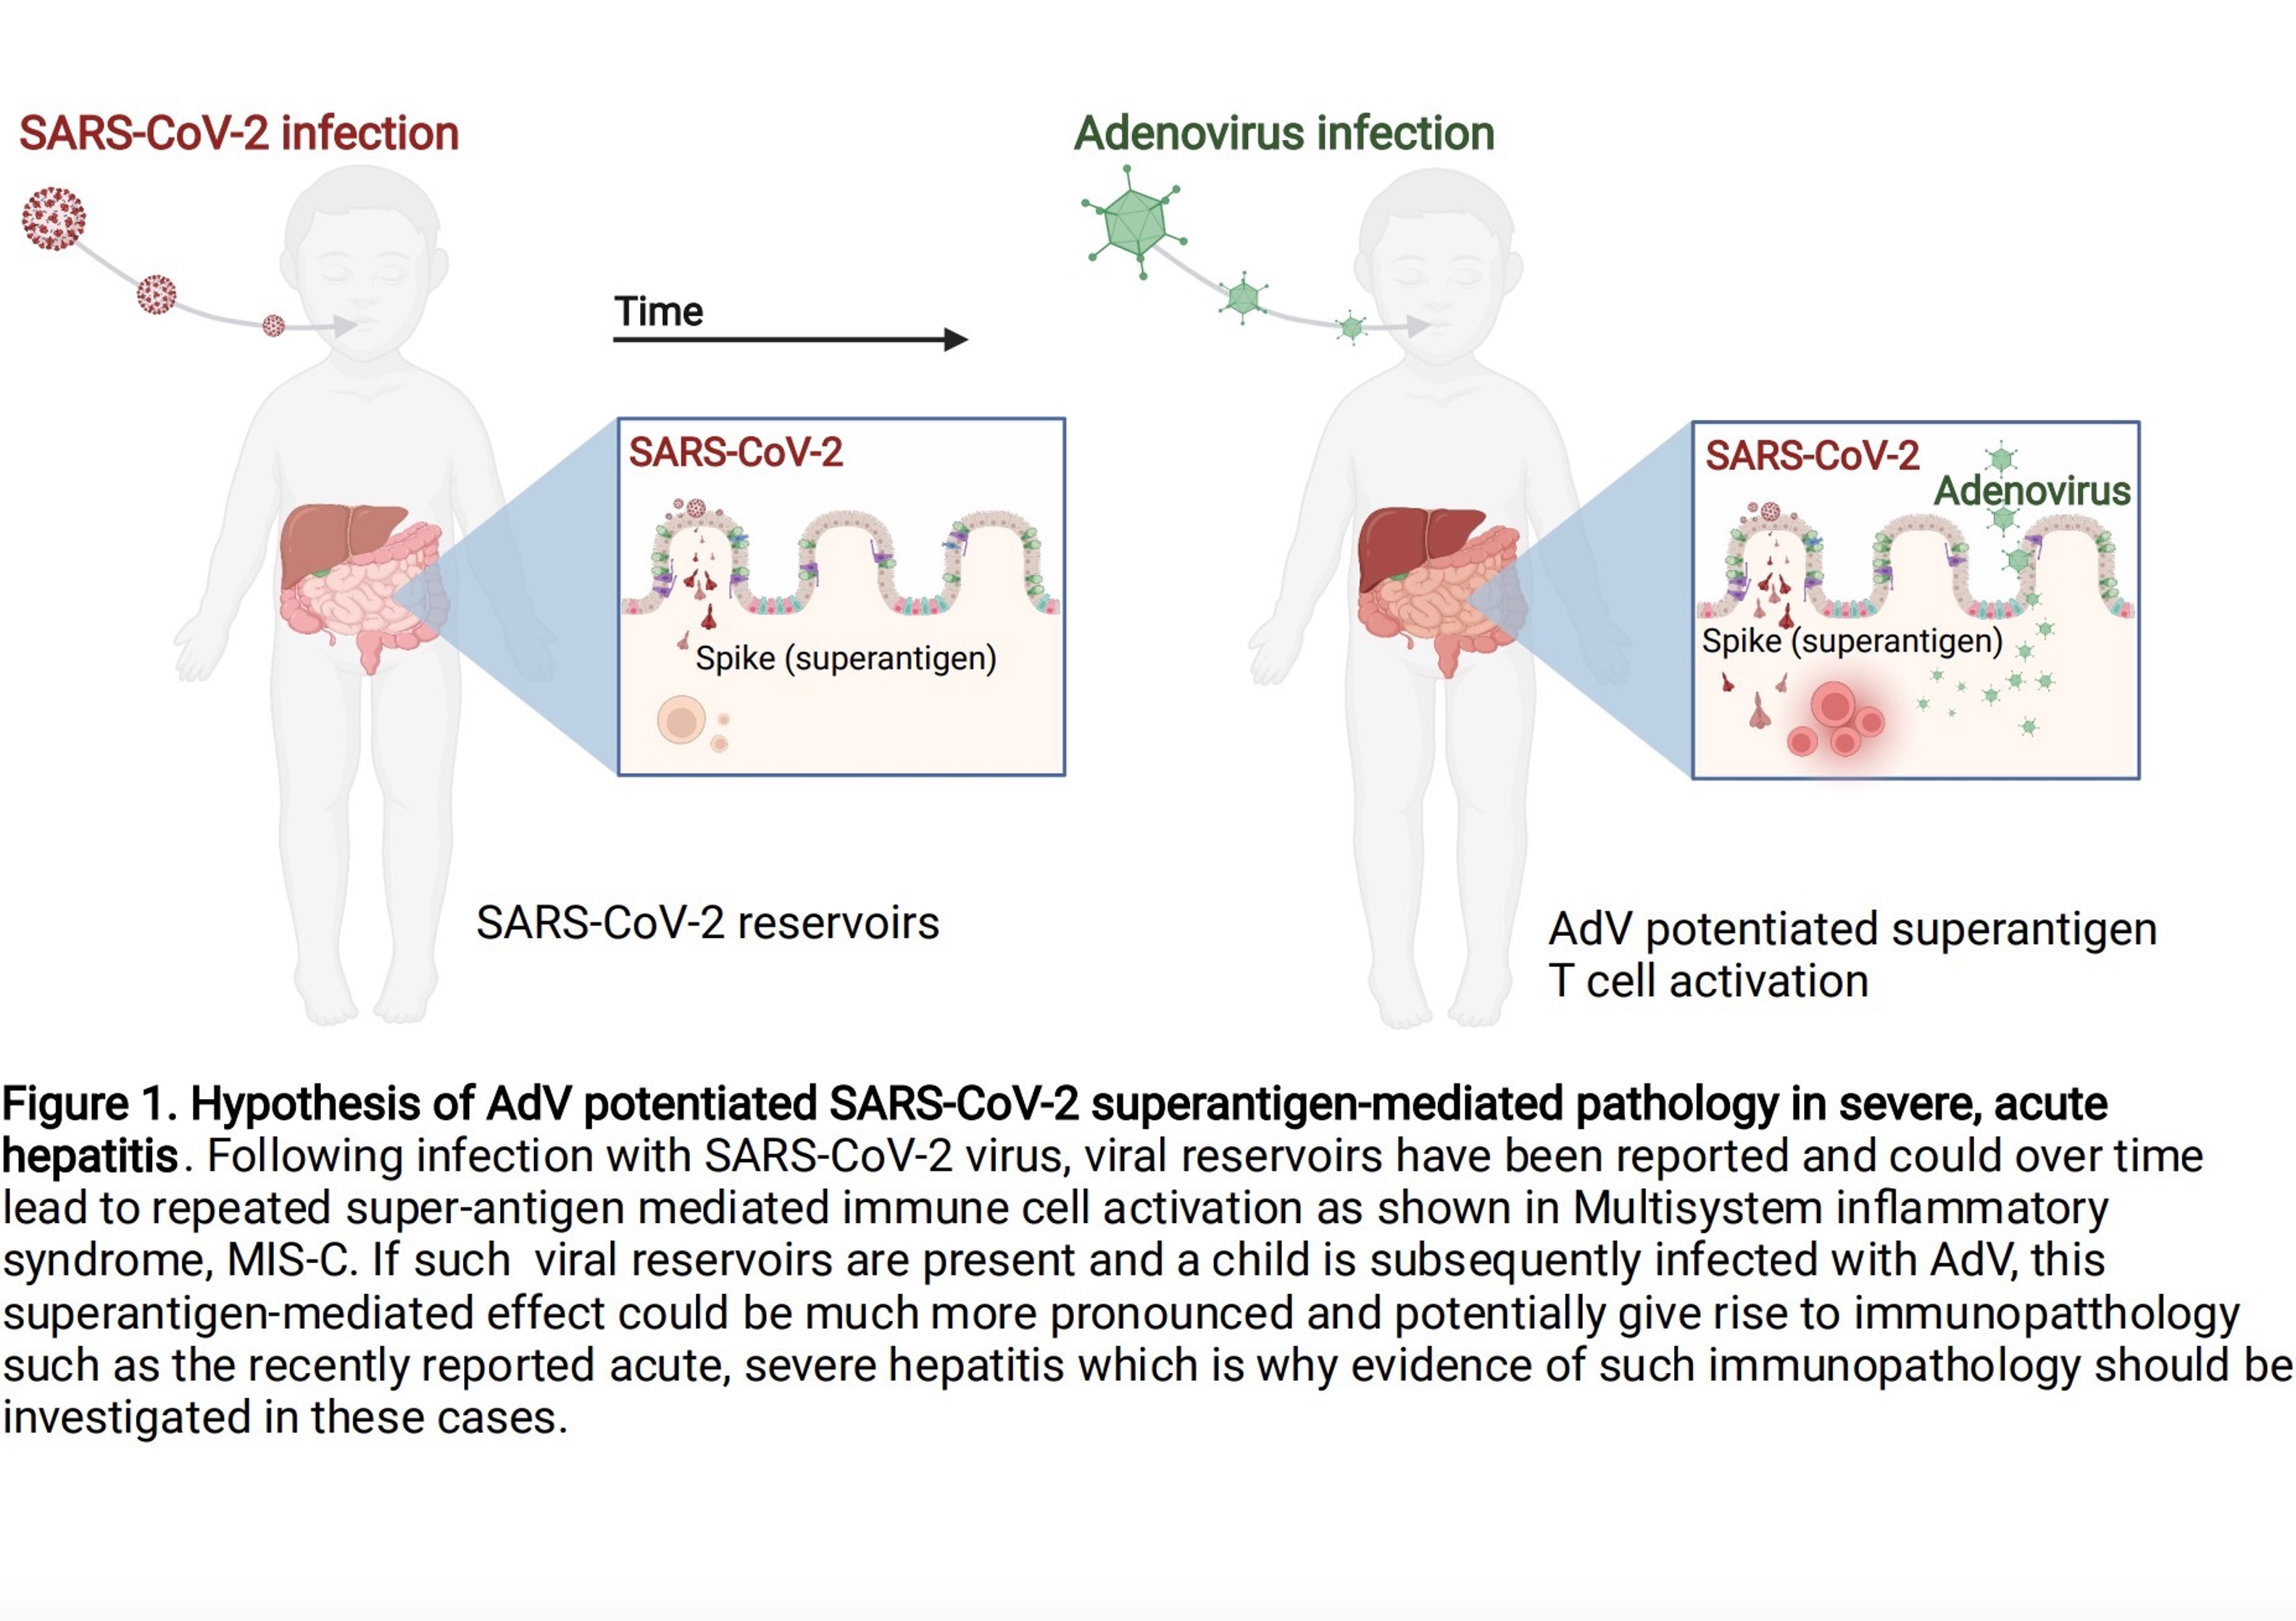 Schematic illustration of the pathology of adenovirus (AdV)-enhanced SARS-CoV-2 superantigen-mediated severe acute hepatitis.